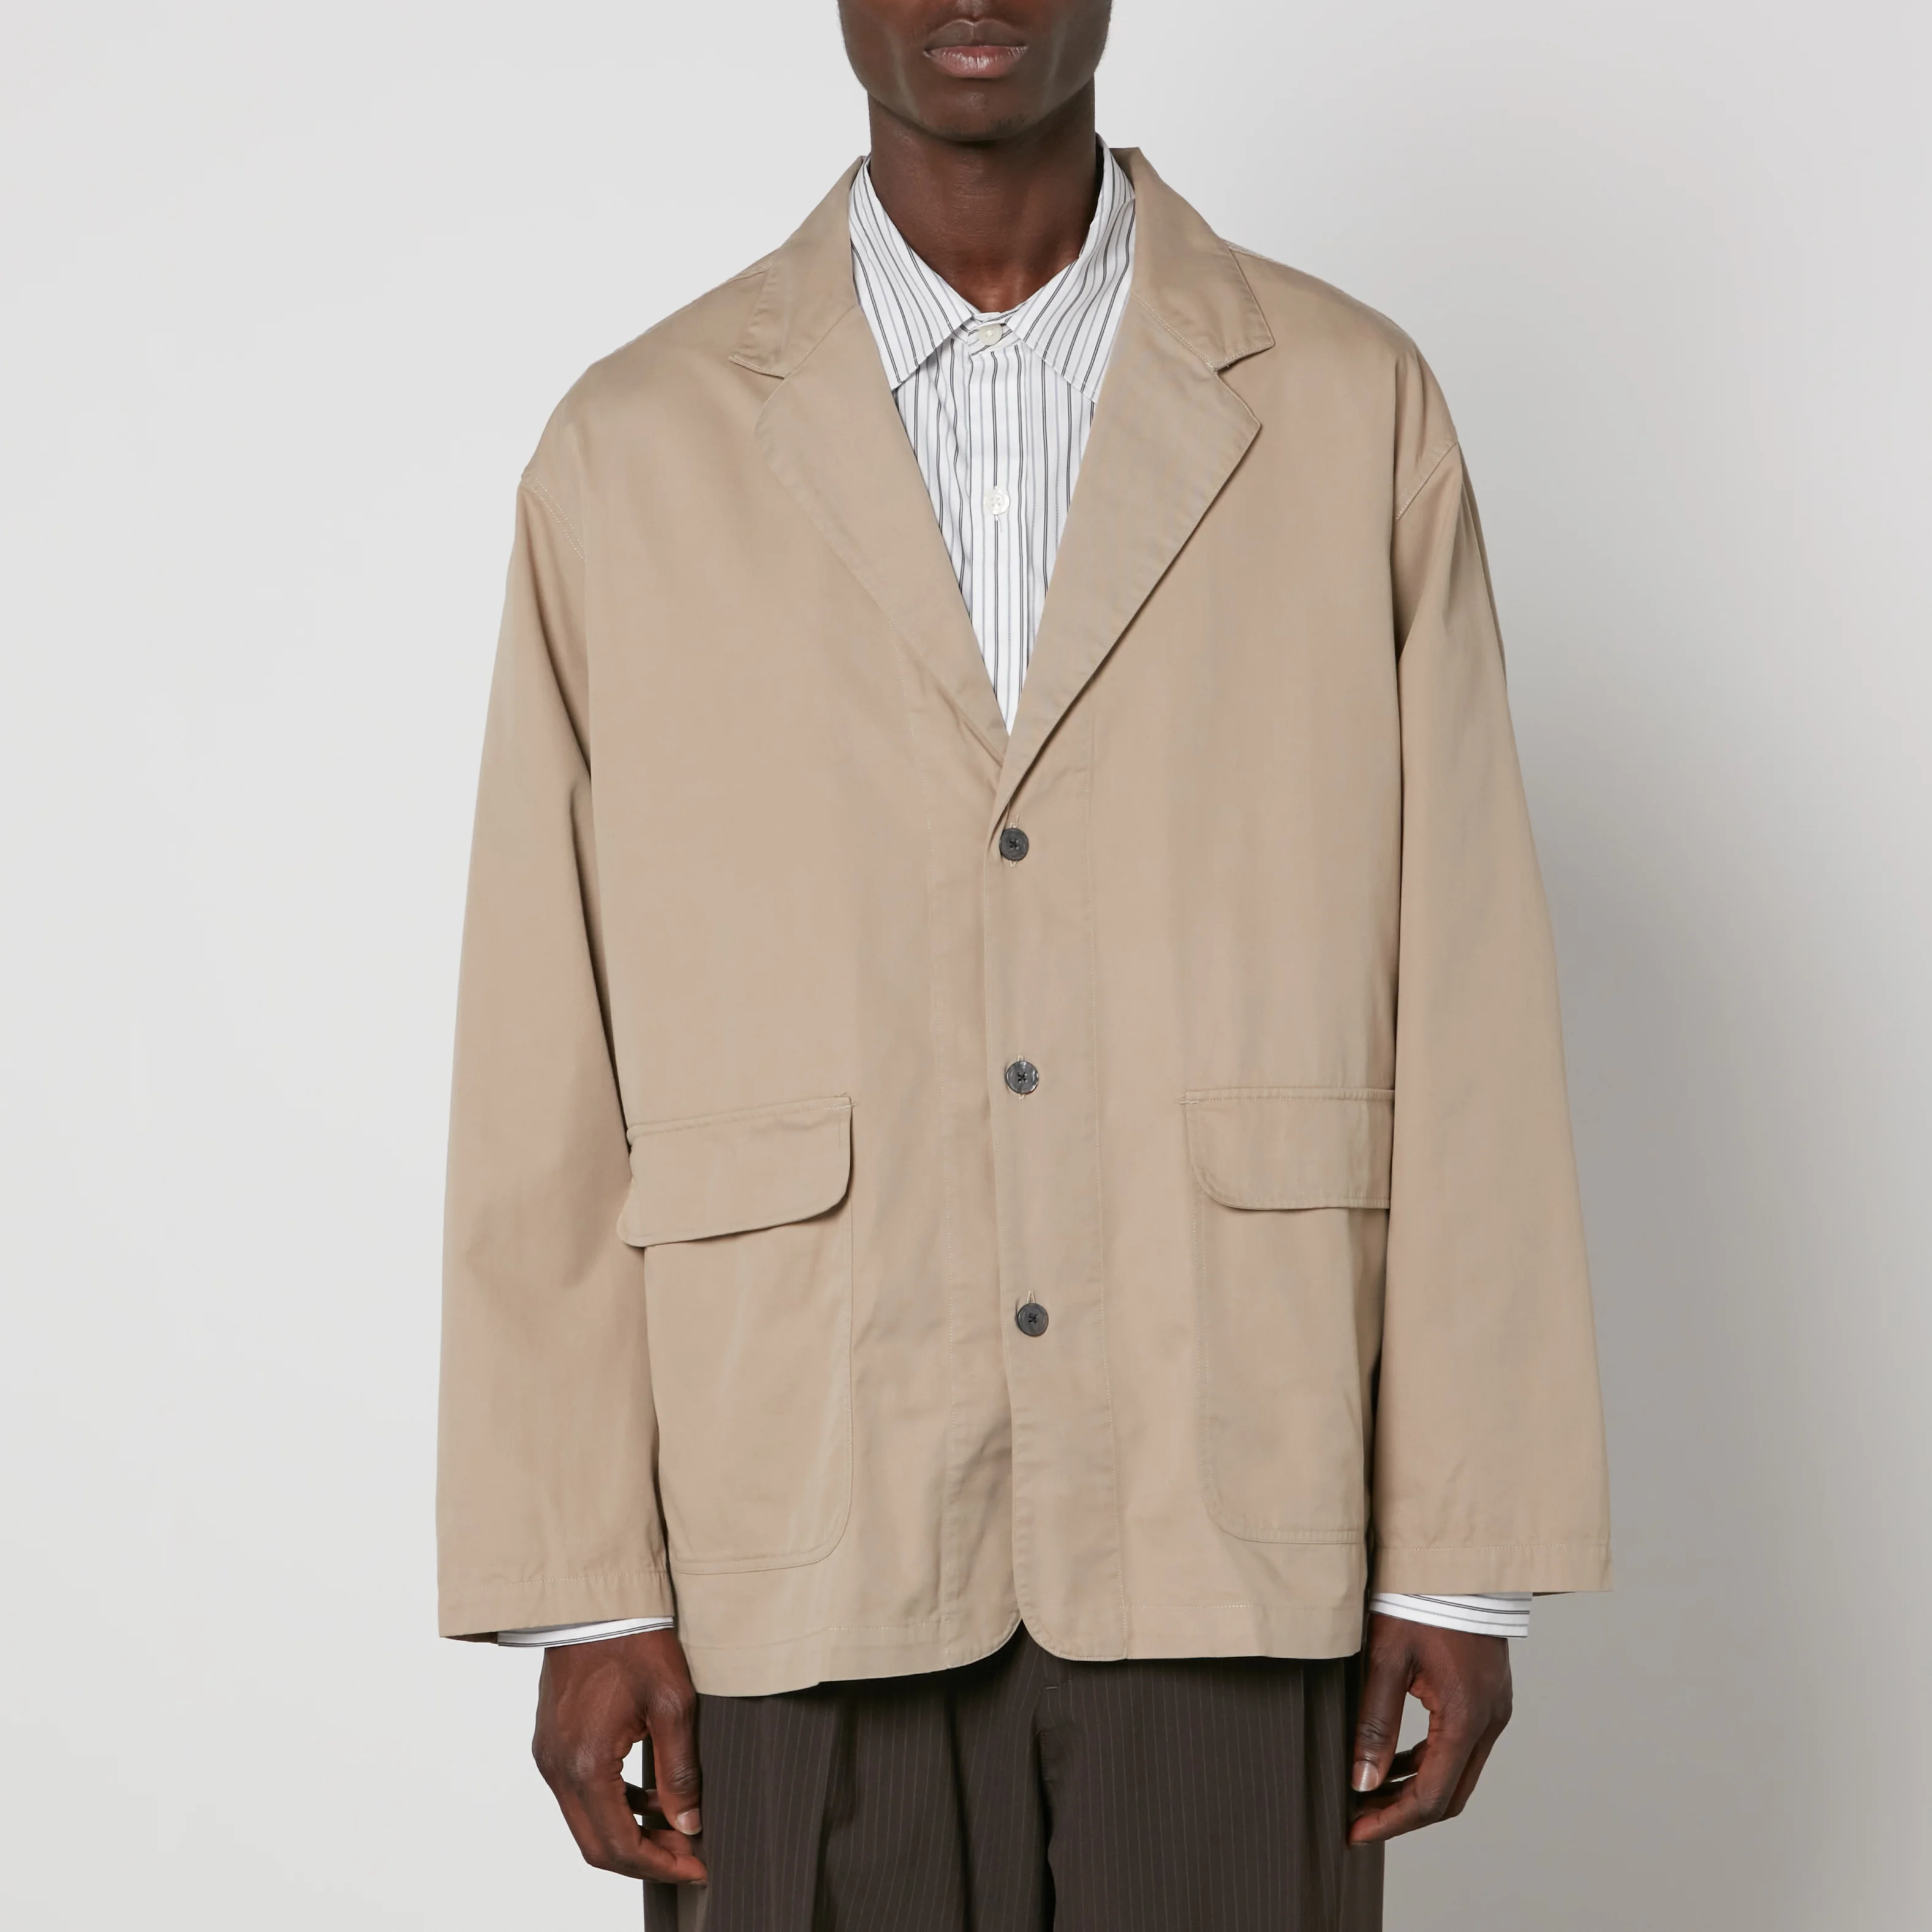 mfpen Article Cotton and TENCEL-Blend Jacket Image 1